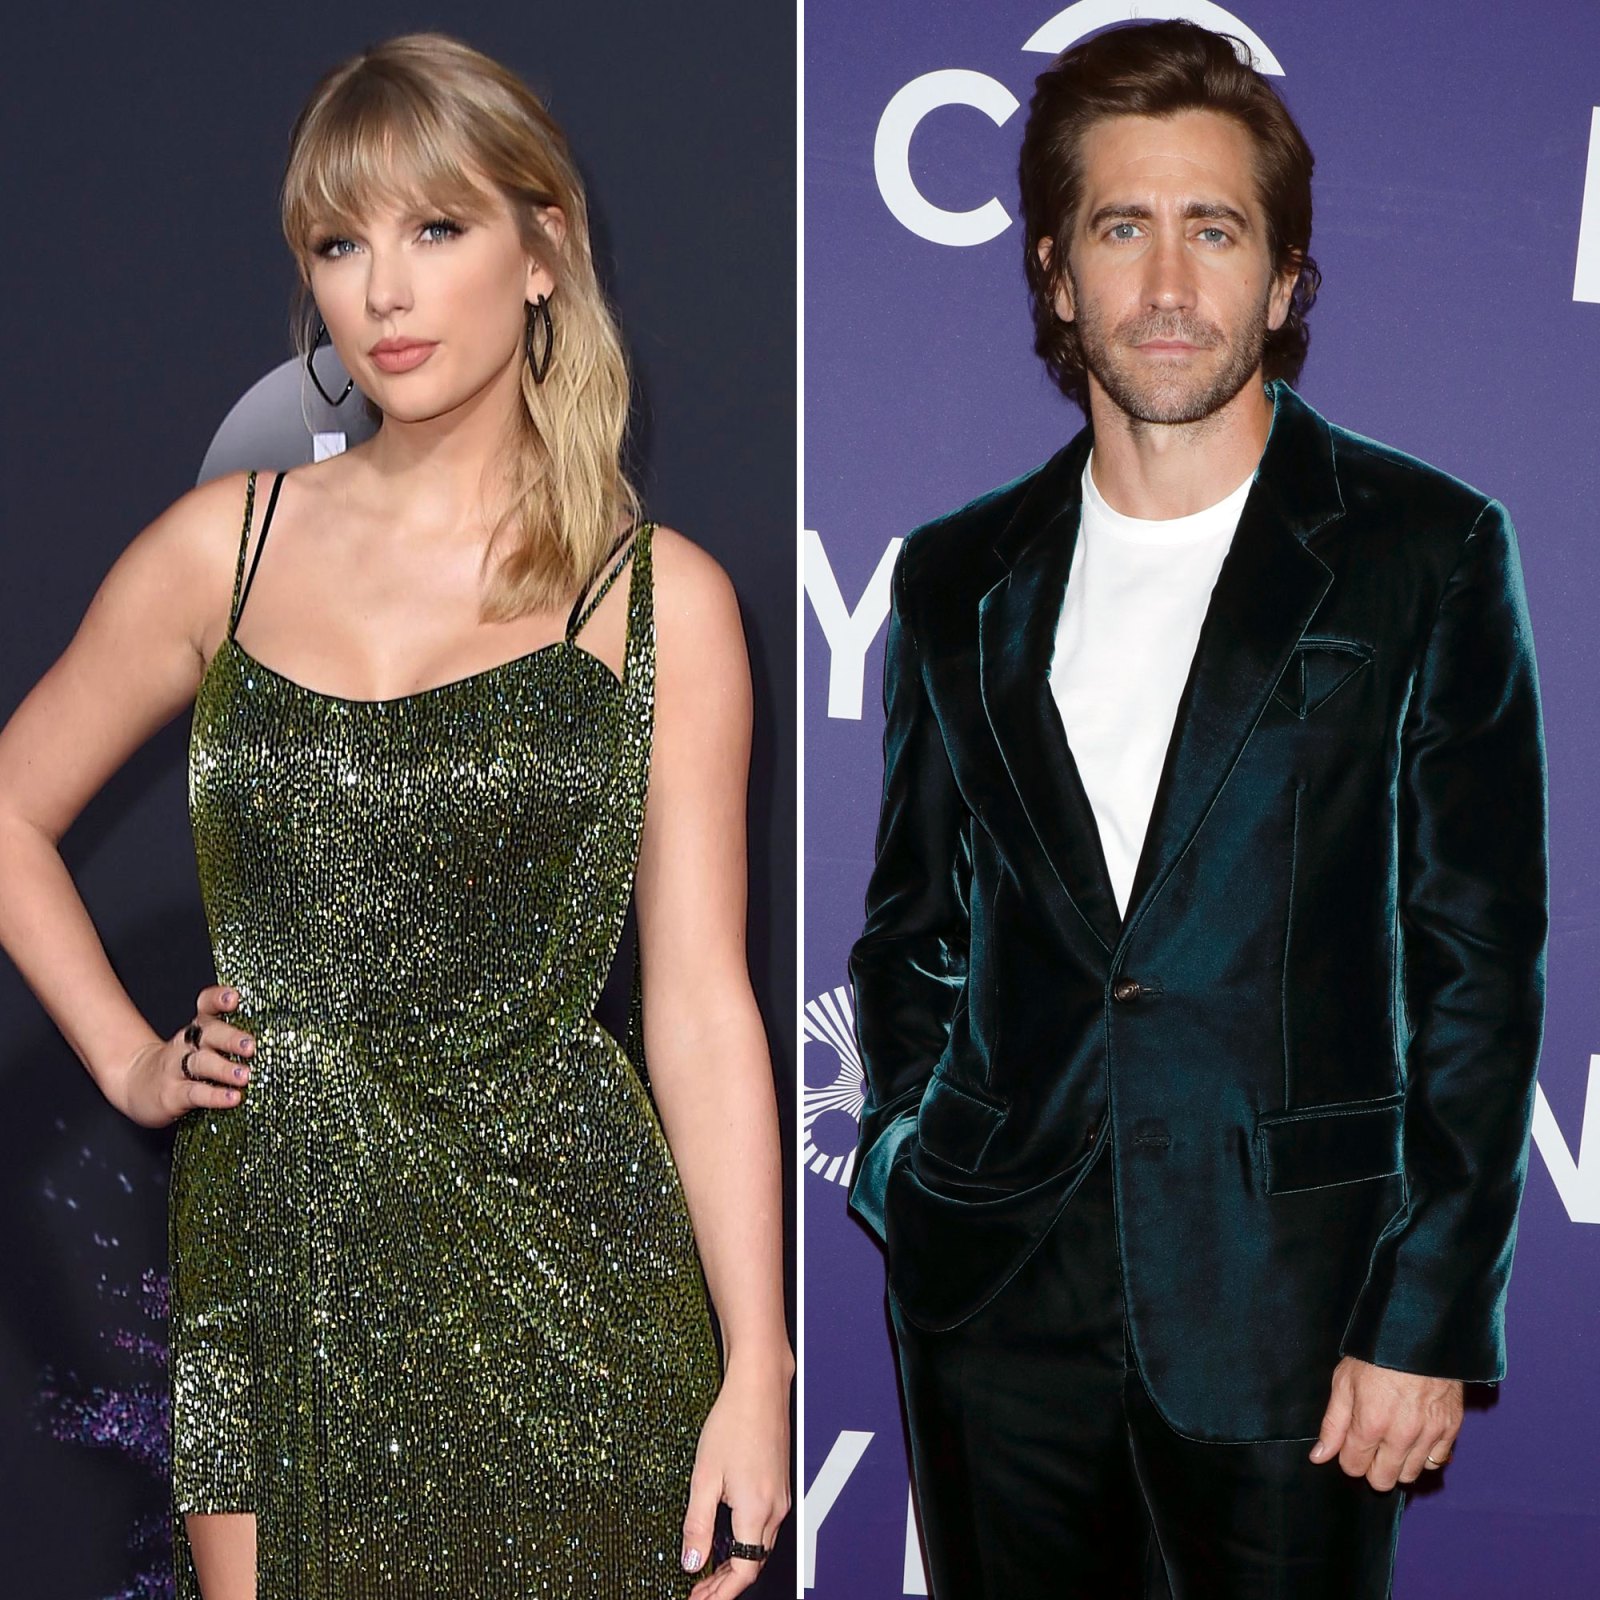 Inside Taylor Swift and Jake Gyllenhaal’s Short-Lived Romance